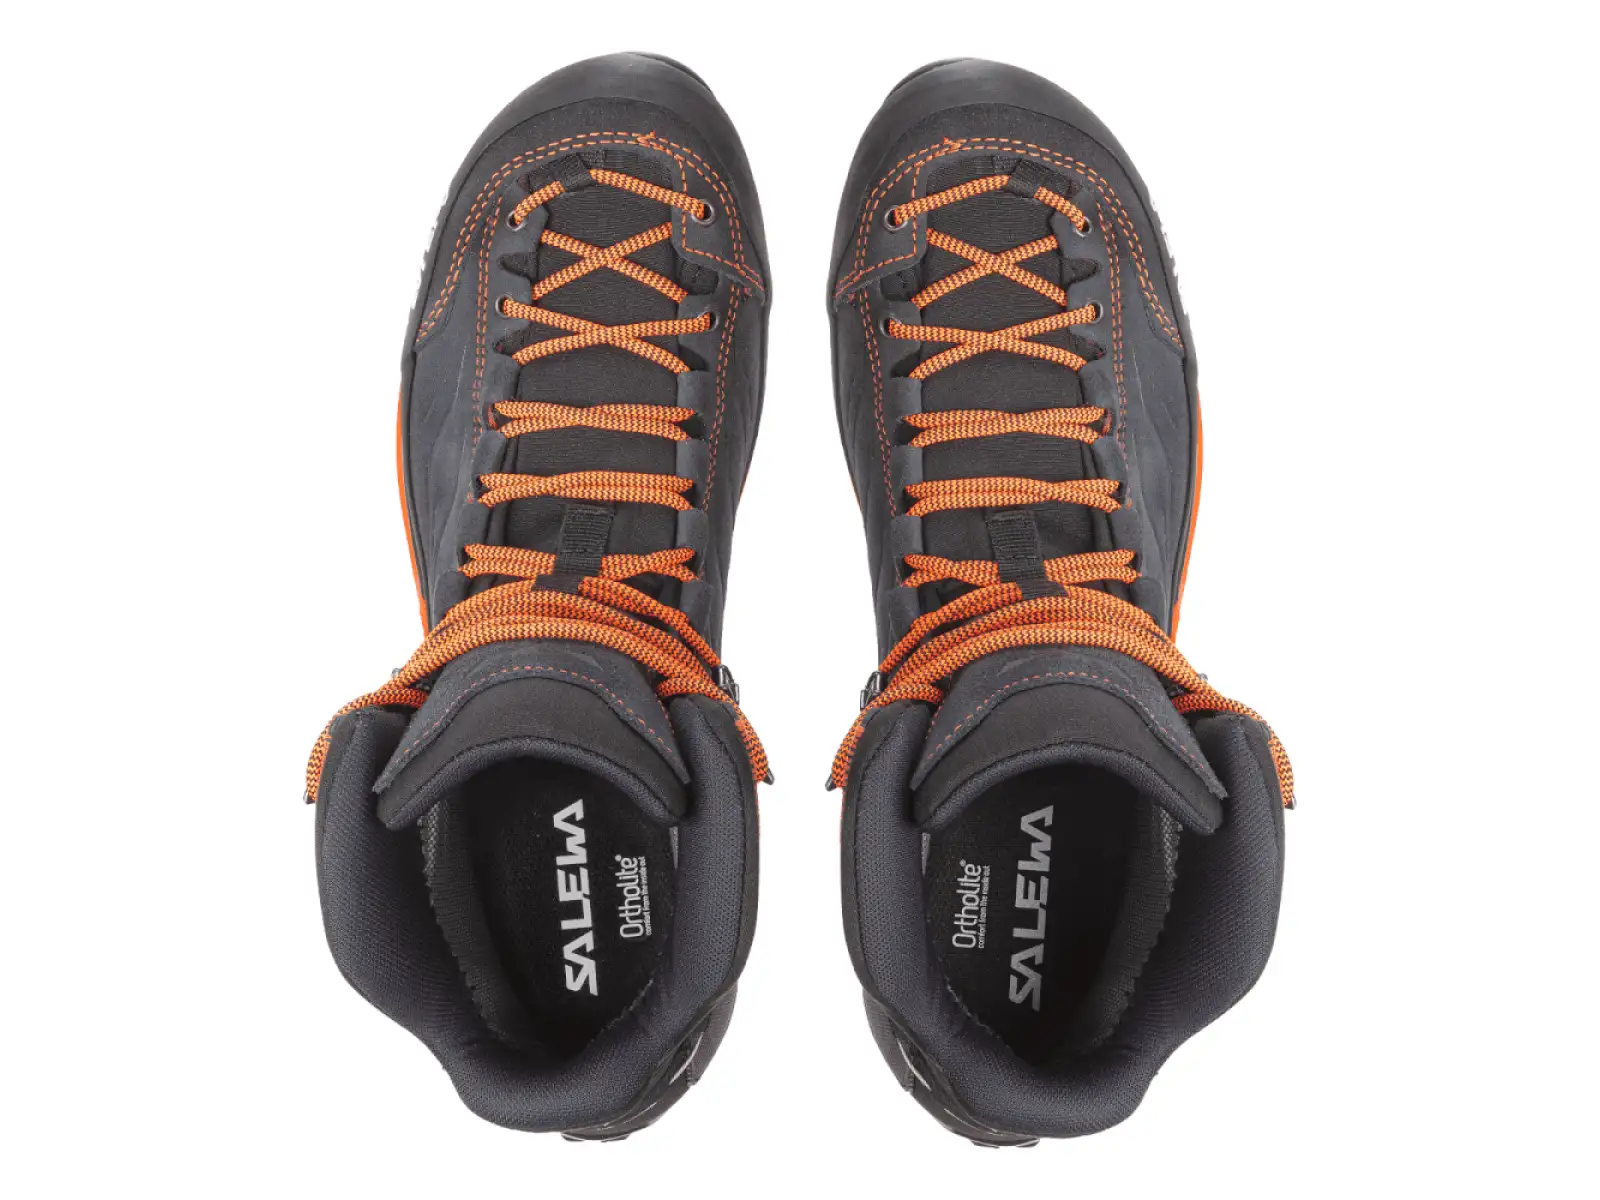 Salewa Mountain Trainer pánské boty asphalt/fluo orange